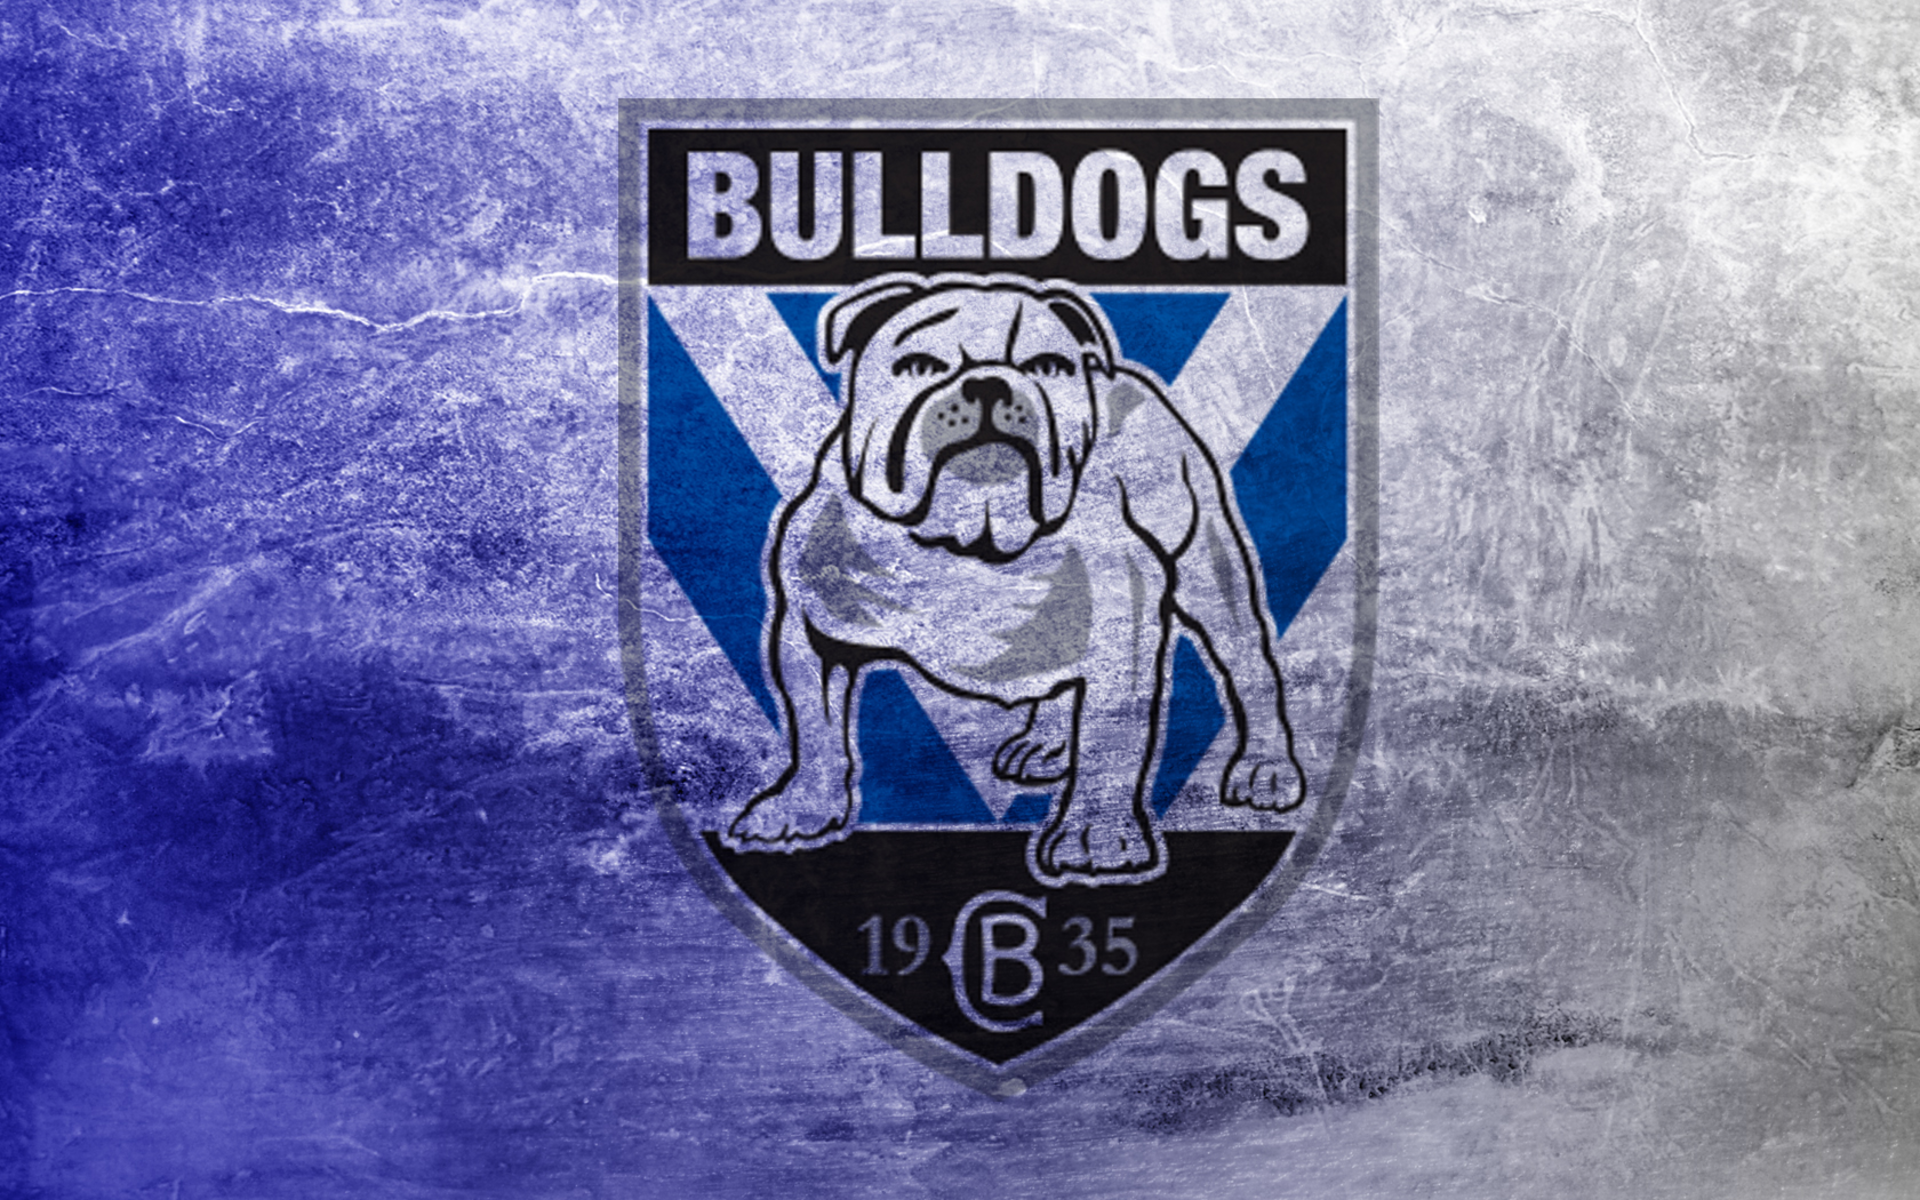 Canterbury-Bankstown Bulldogs HD Wallpaper